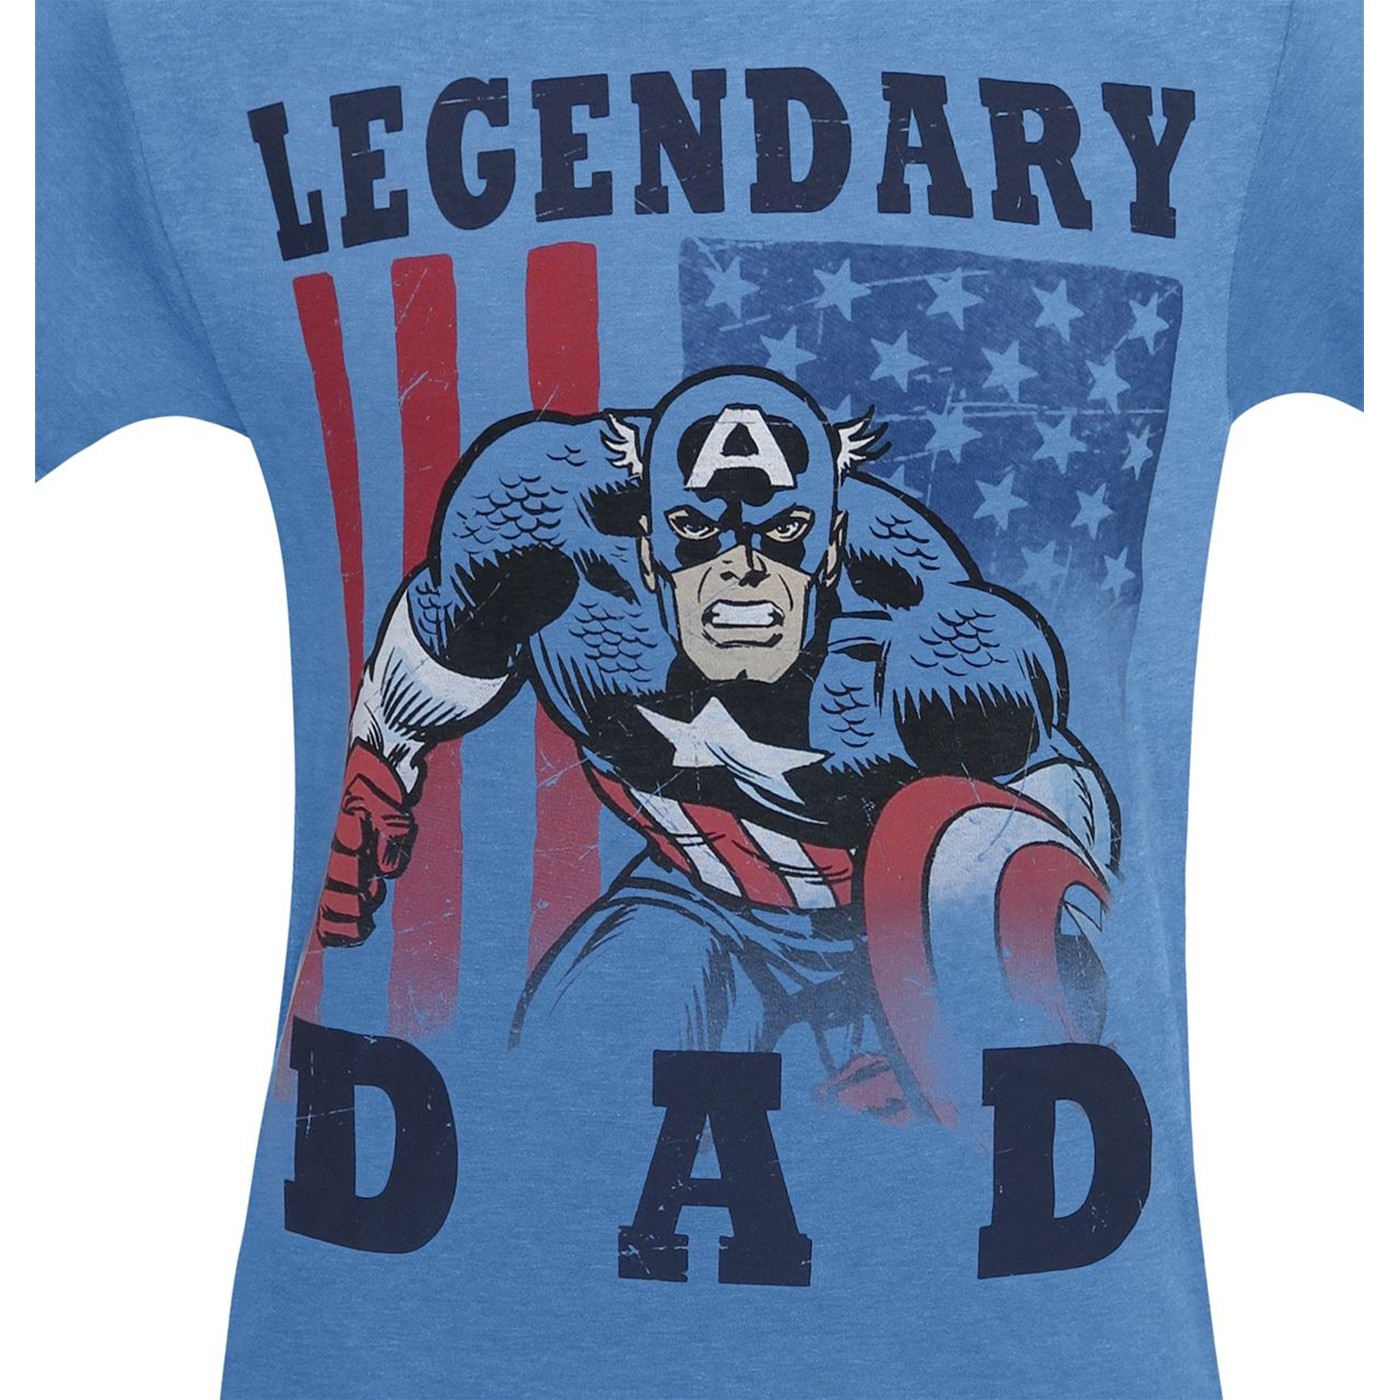 Captain America Legendary Dad Men's T-Shirt